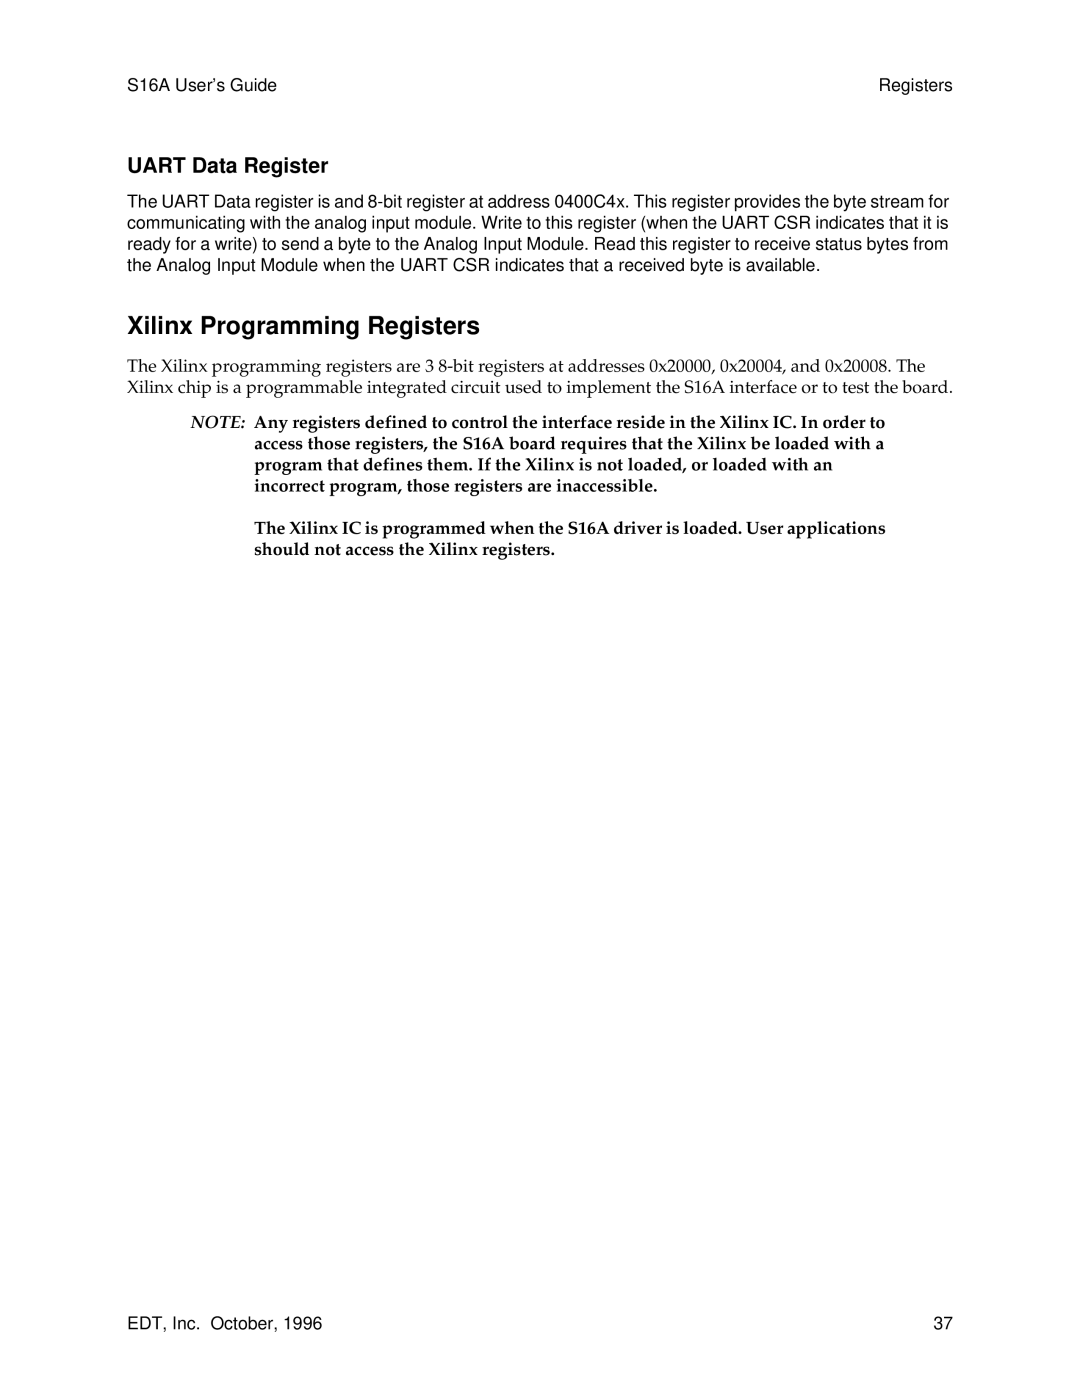 Sun Microsystems S16A manual Xilinx Programming Registers, UART Data Register 